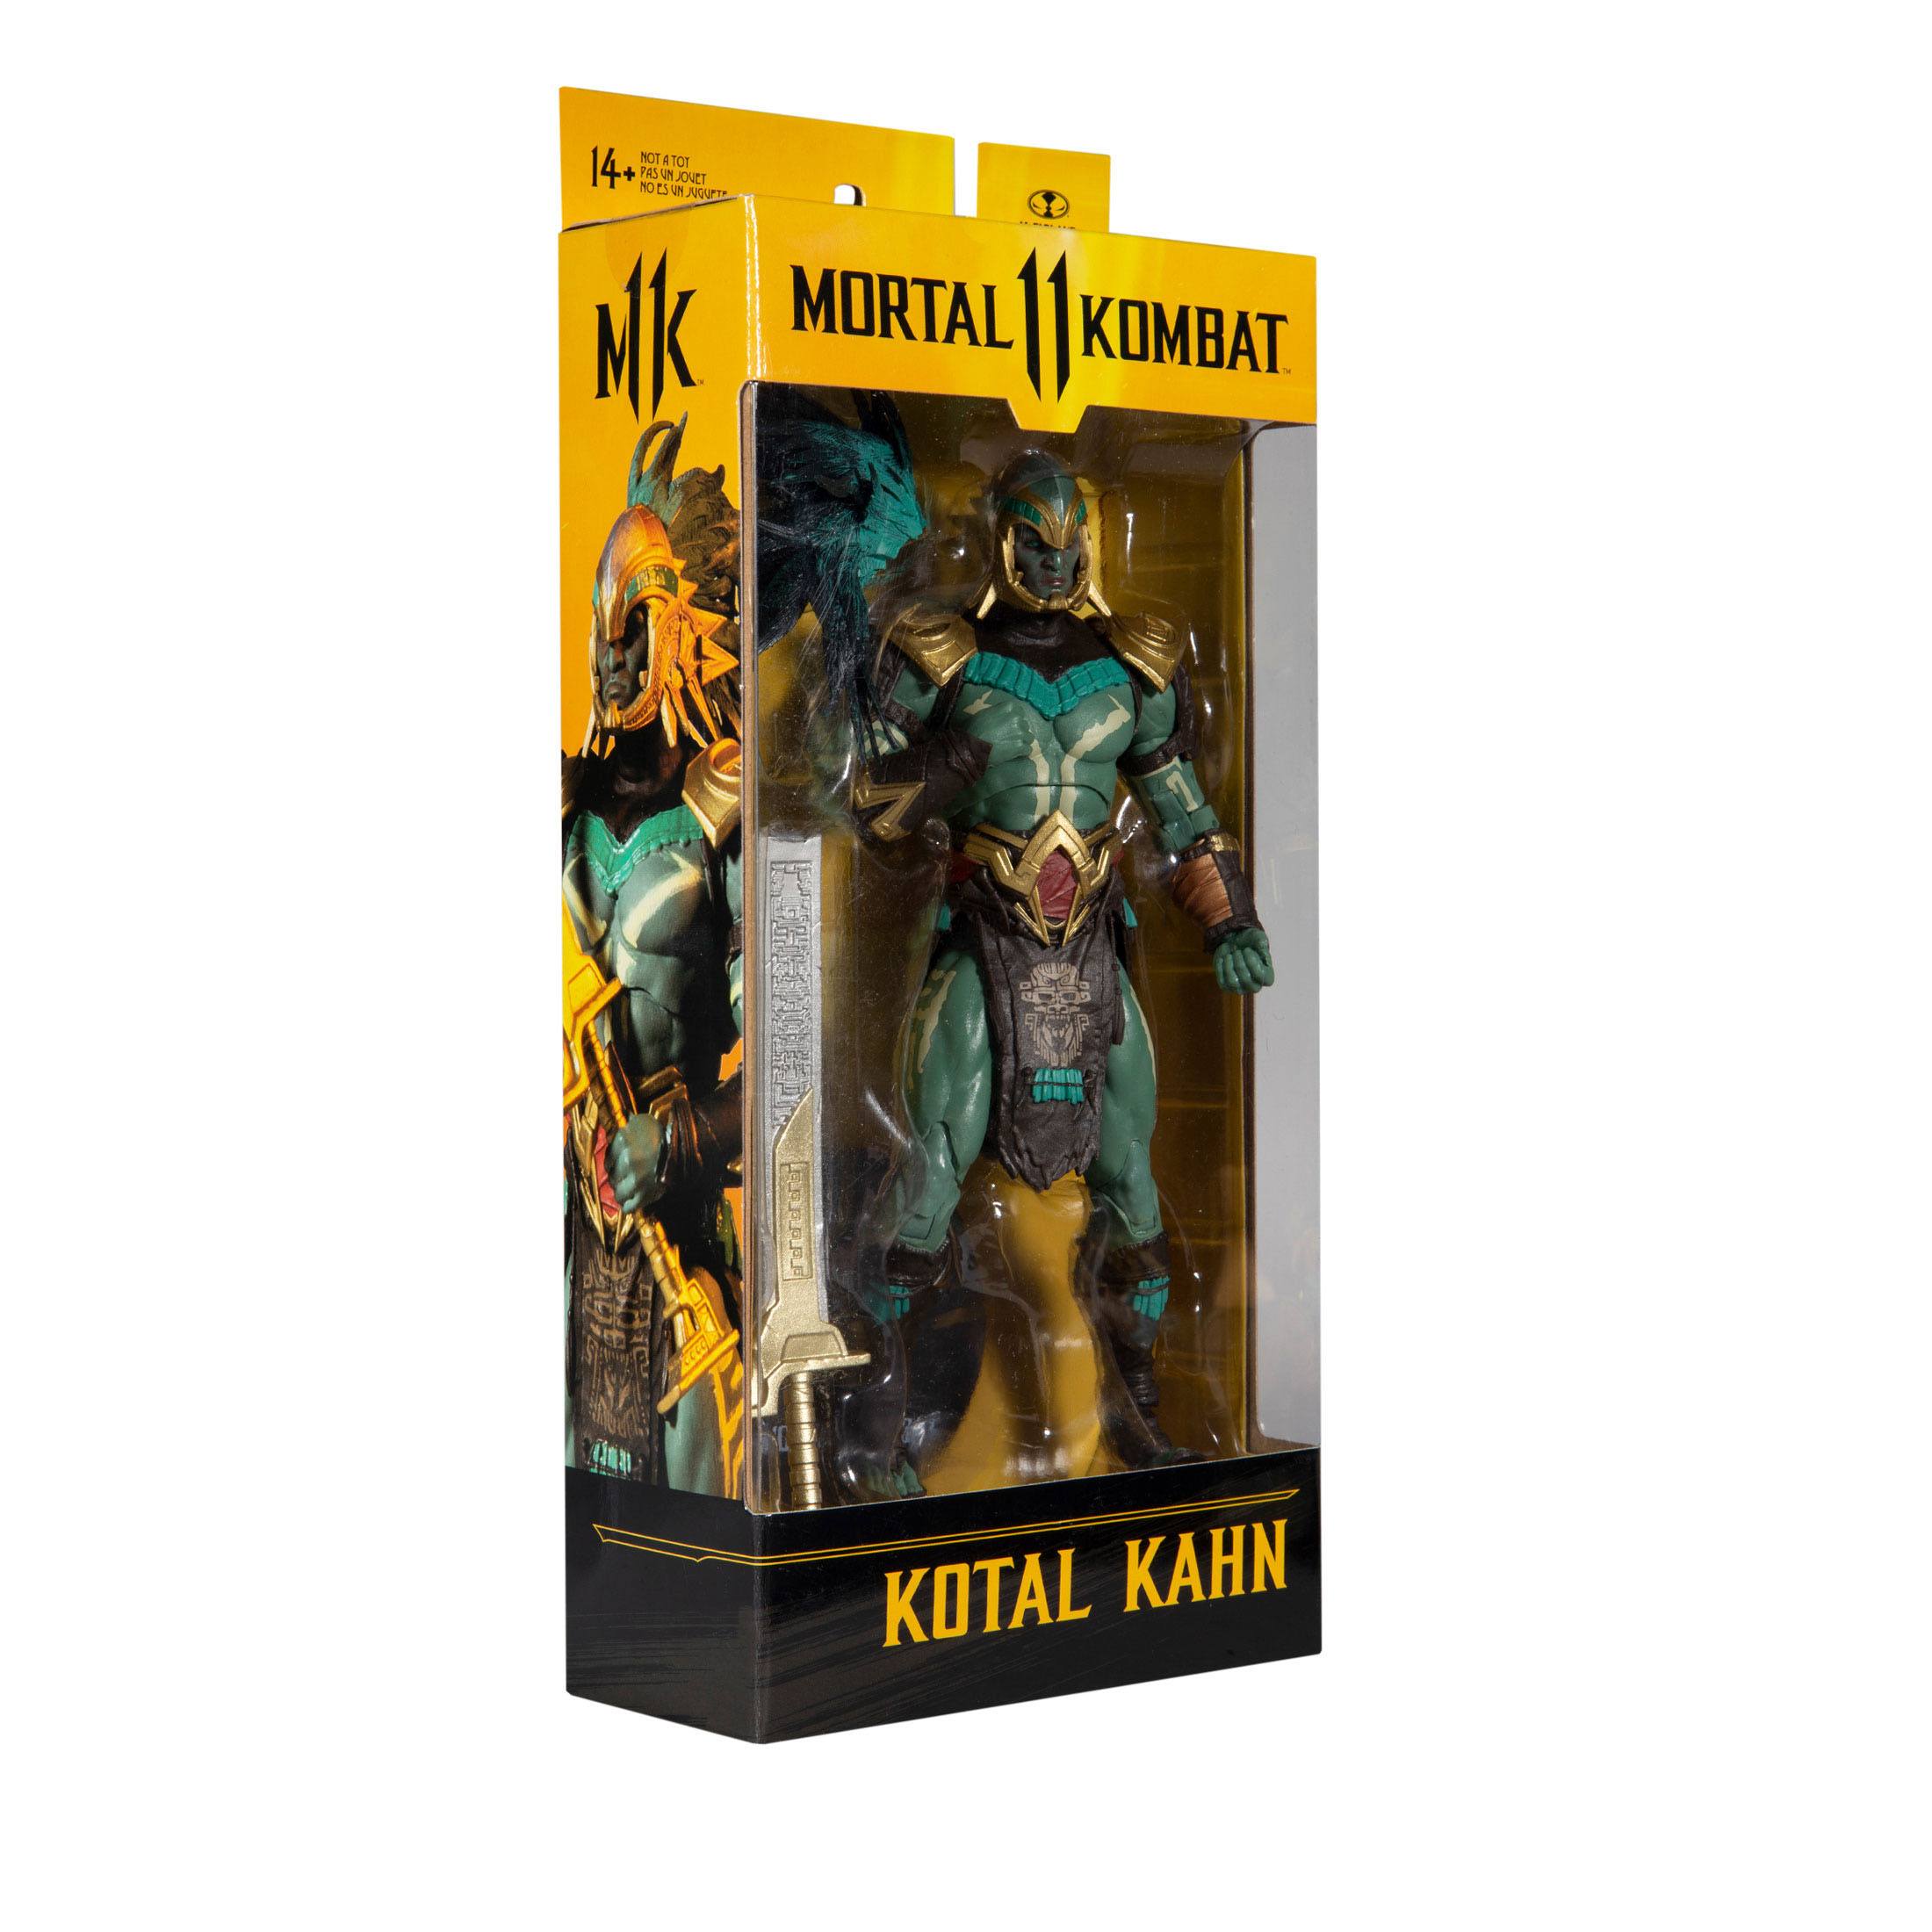 Mortal Kombat Actionfigur Kotal Kahn 18 cm MCF11057 787926110579